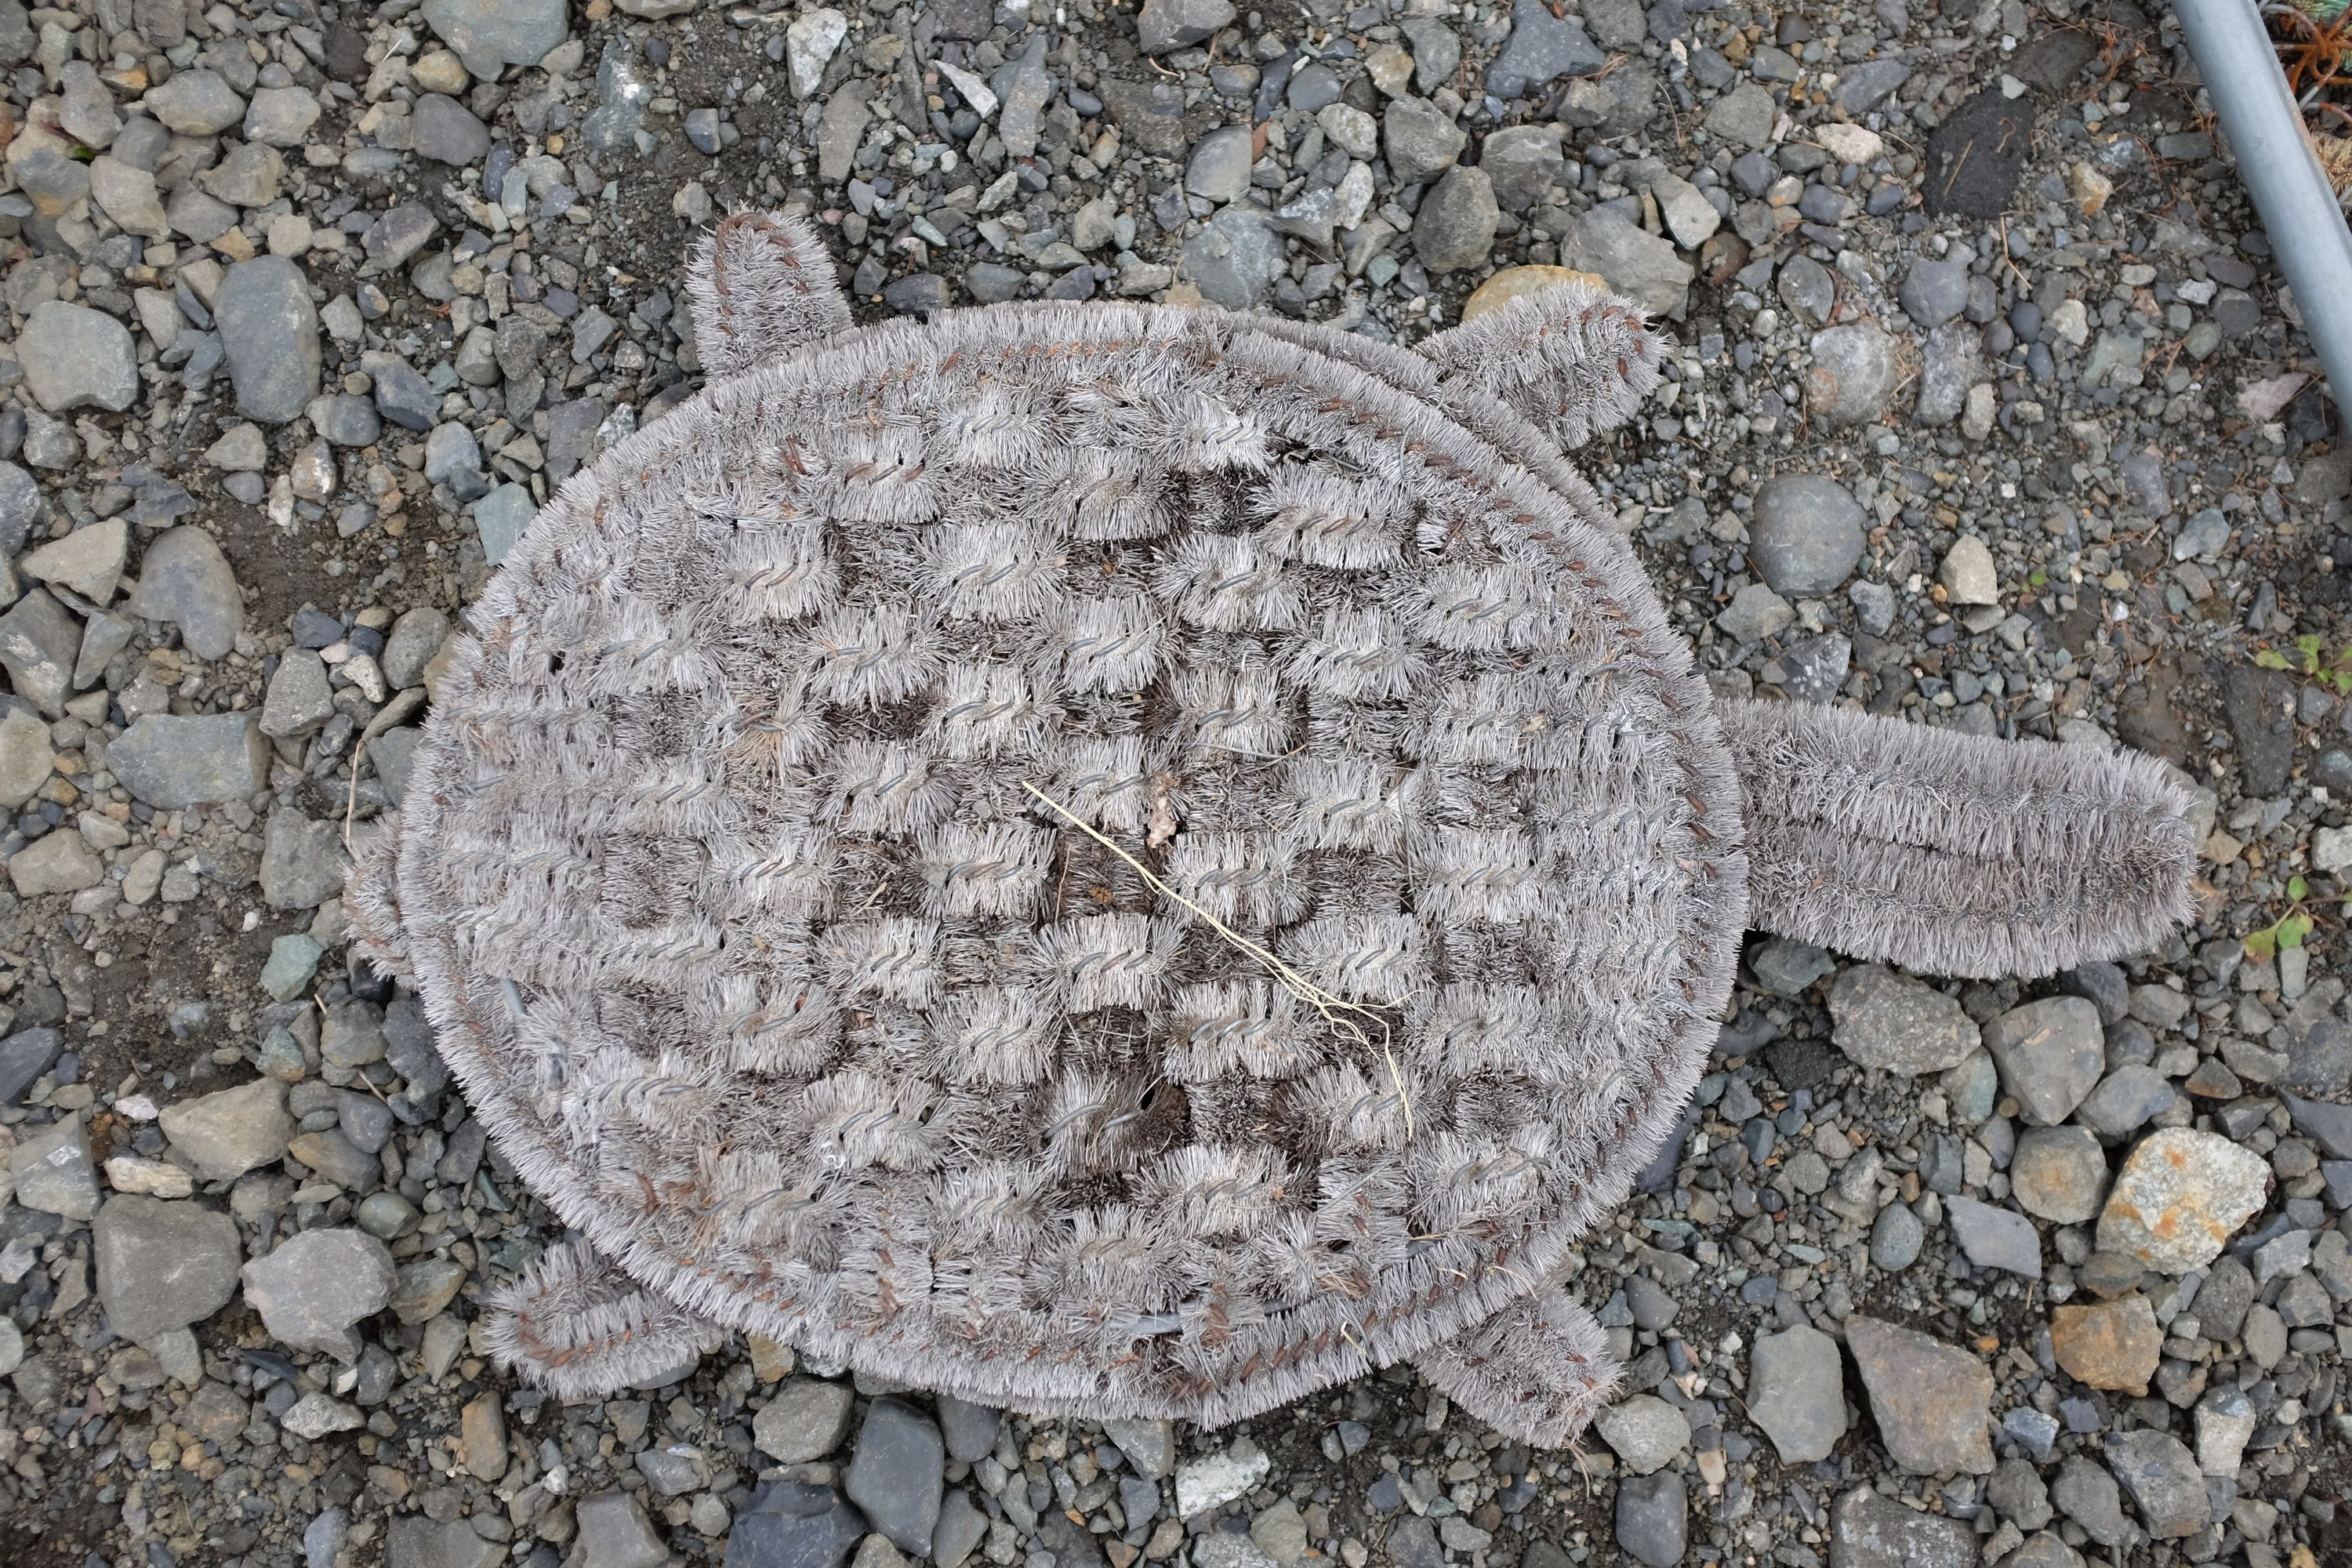 A doormat shaped like a tortoise.